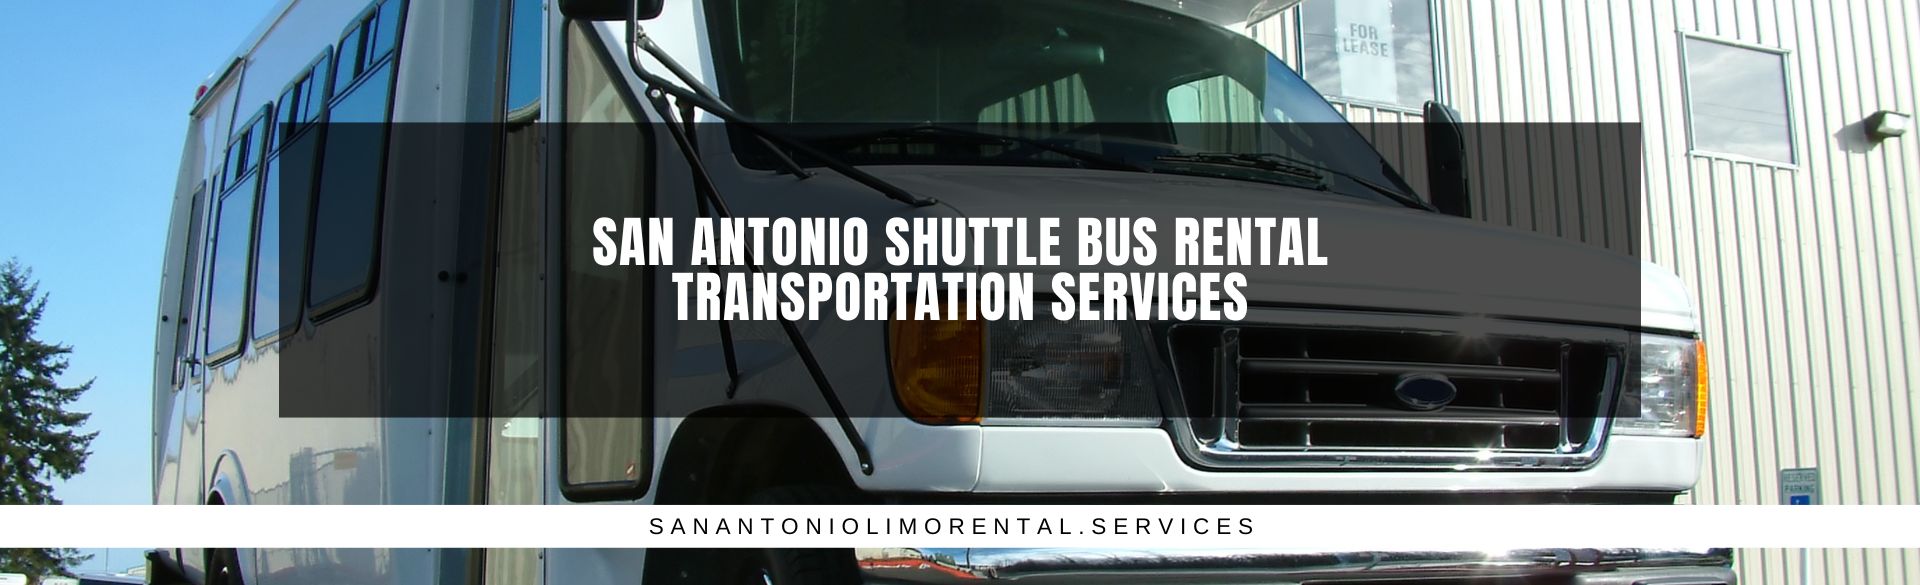 San Antonio Shuttle Bus Rental Transportation Services